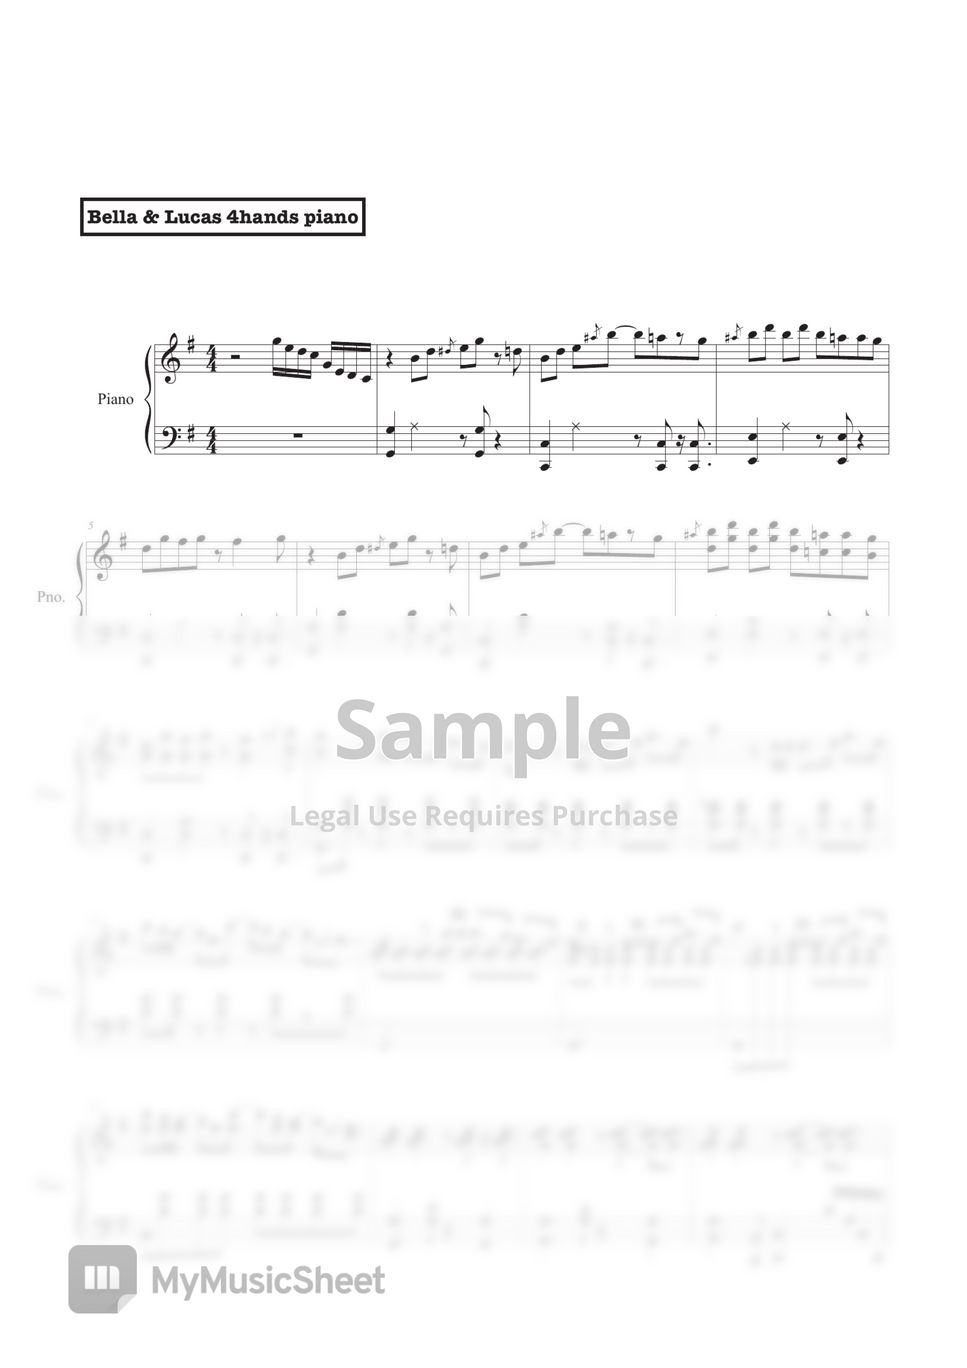 Carol POP - Medley (SOLO Piano) by Bell&Lucas